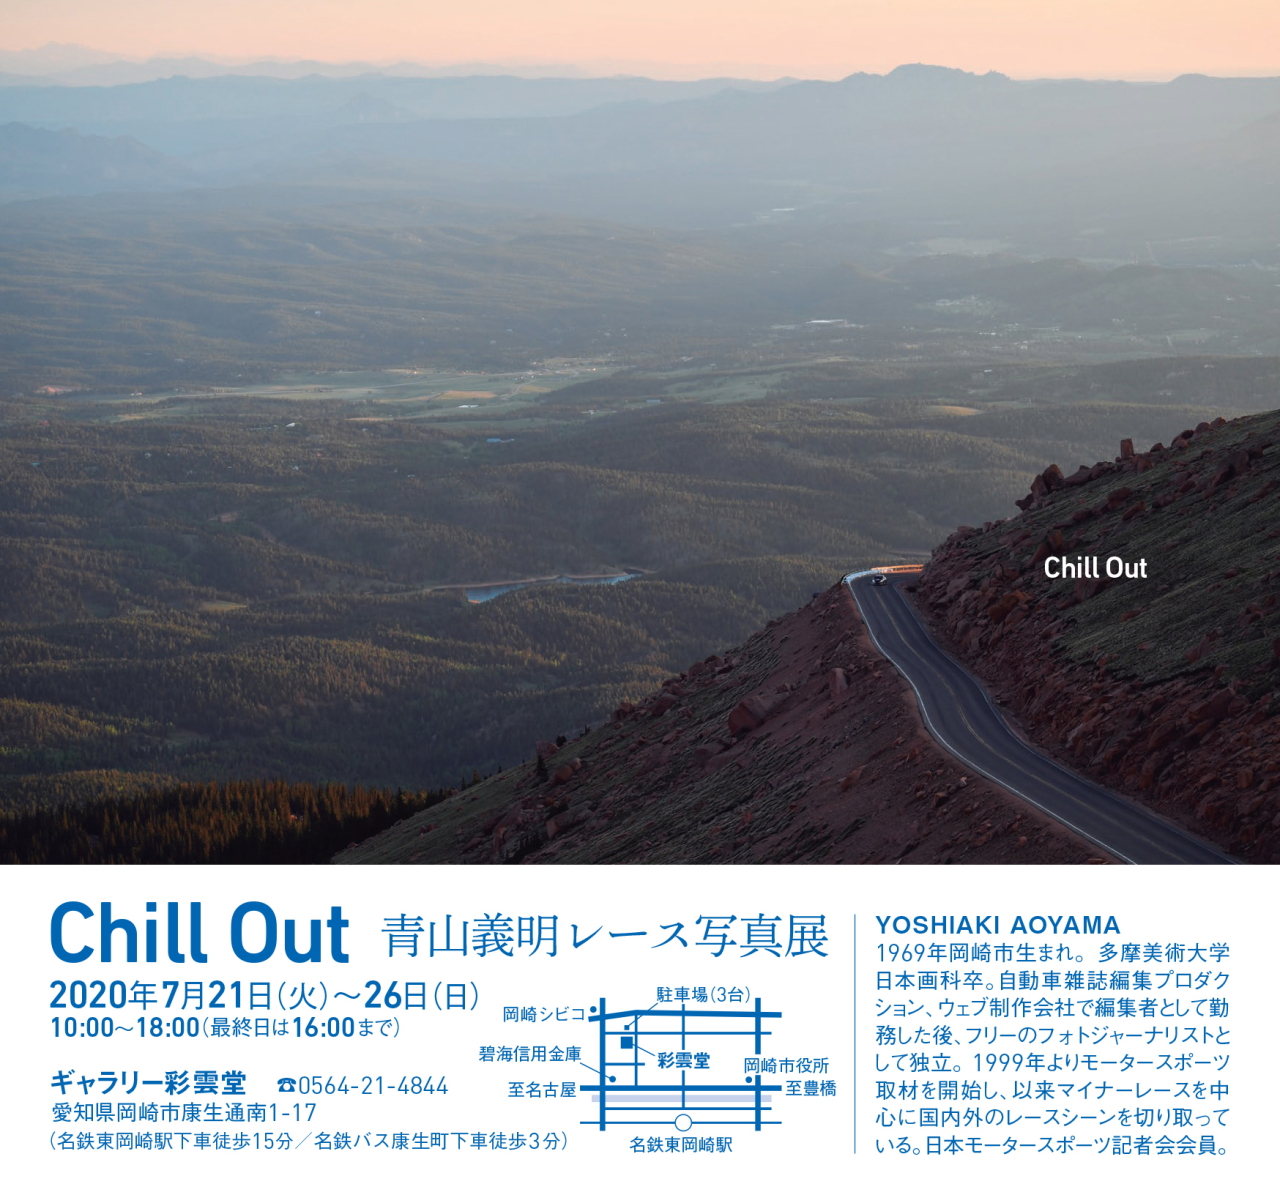 Chillout Postcard Kai 画像 クリッカーで活躍中のライター青山義明が愛知県岡崎市でレース写真展を開催 Clicccar Com